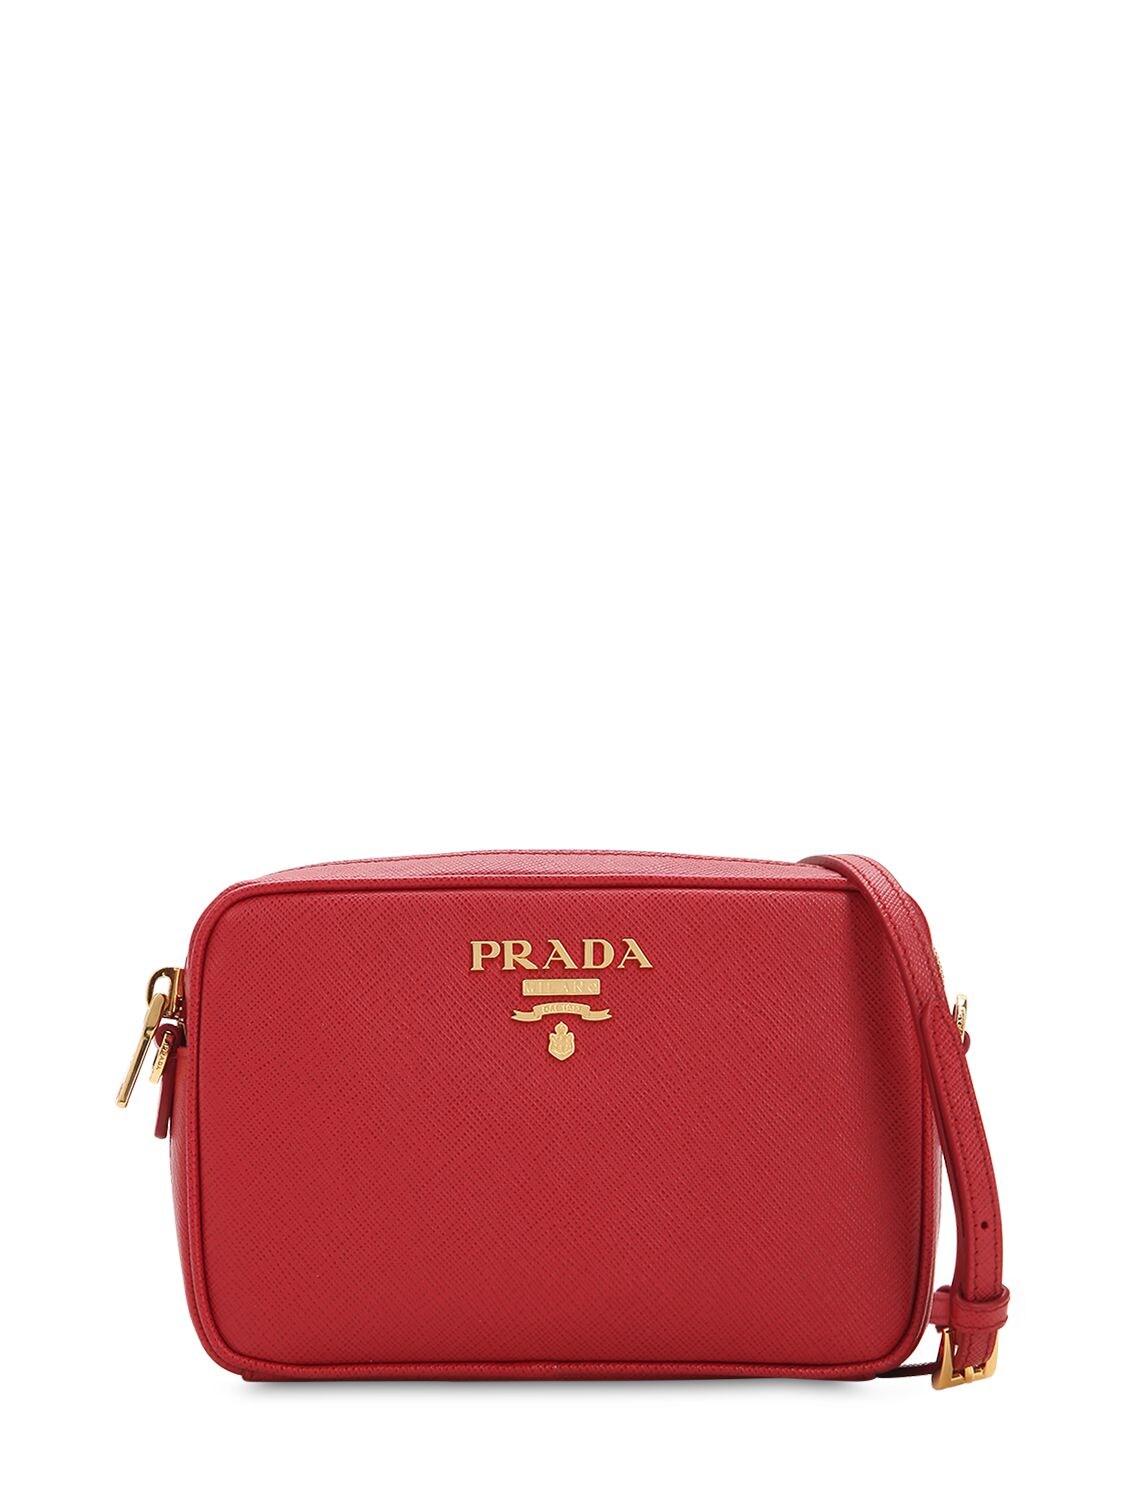 Prada Saffiano Lux Leather Camera Bag In Red